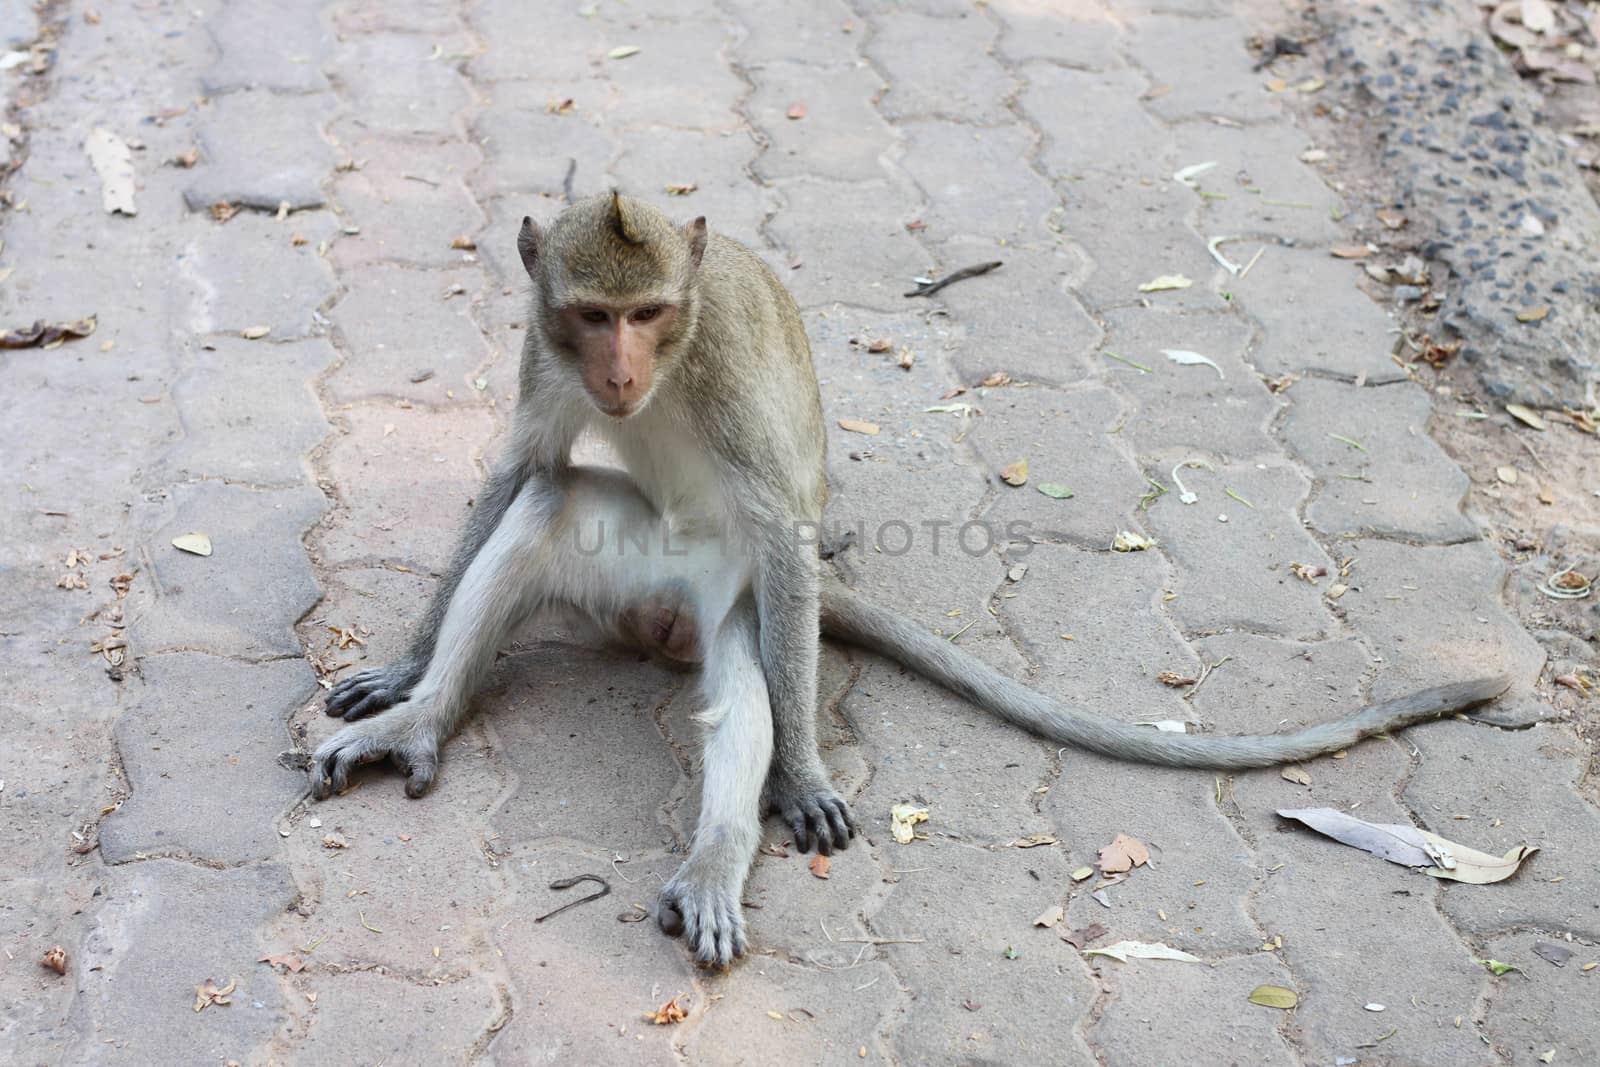 Monkey sitting on the cement floor